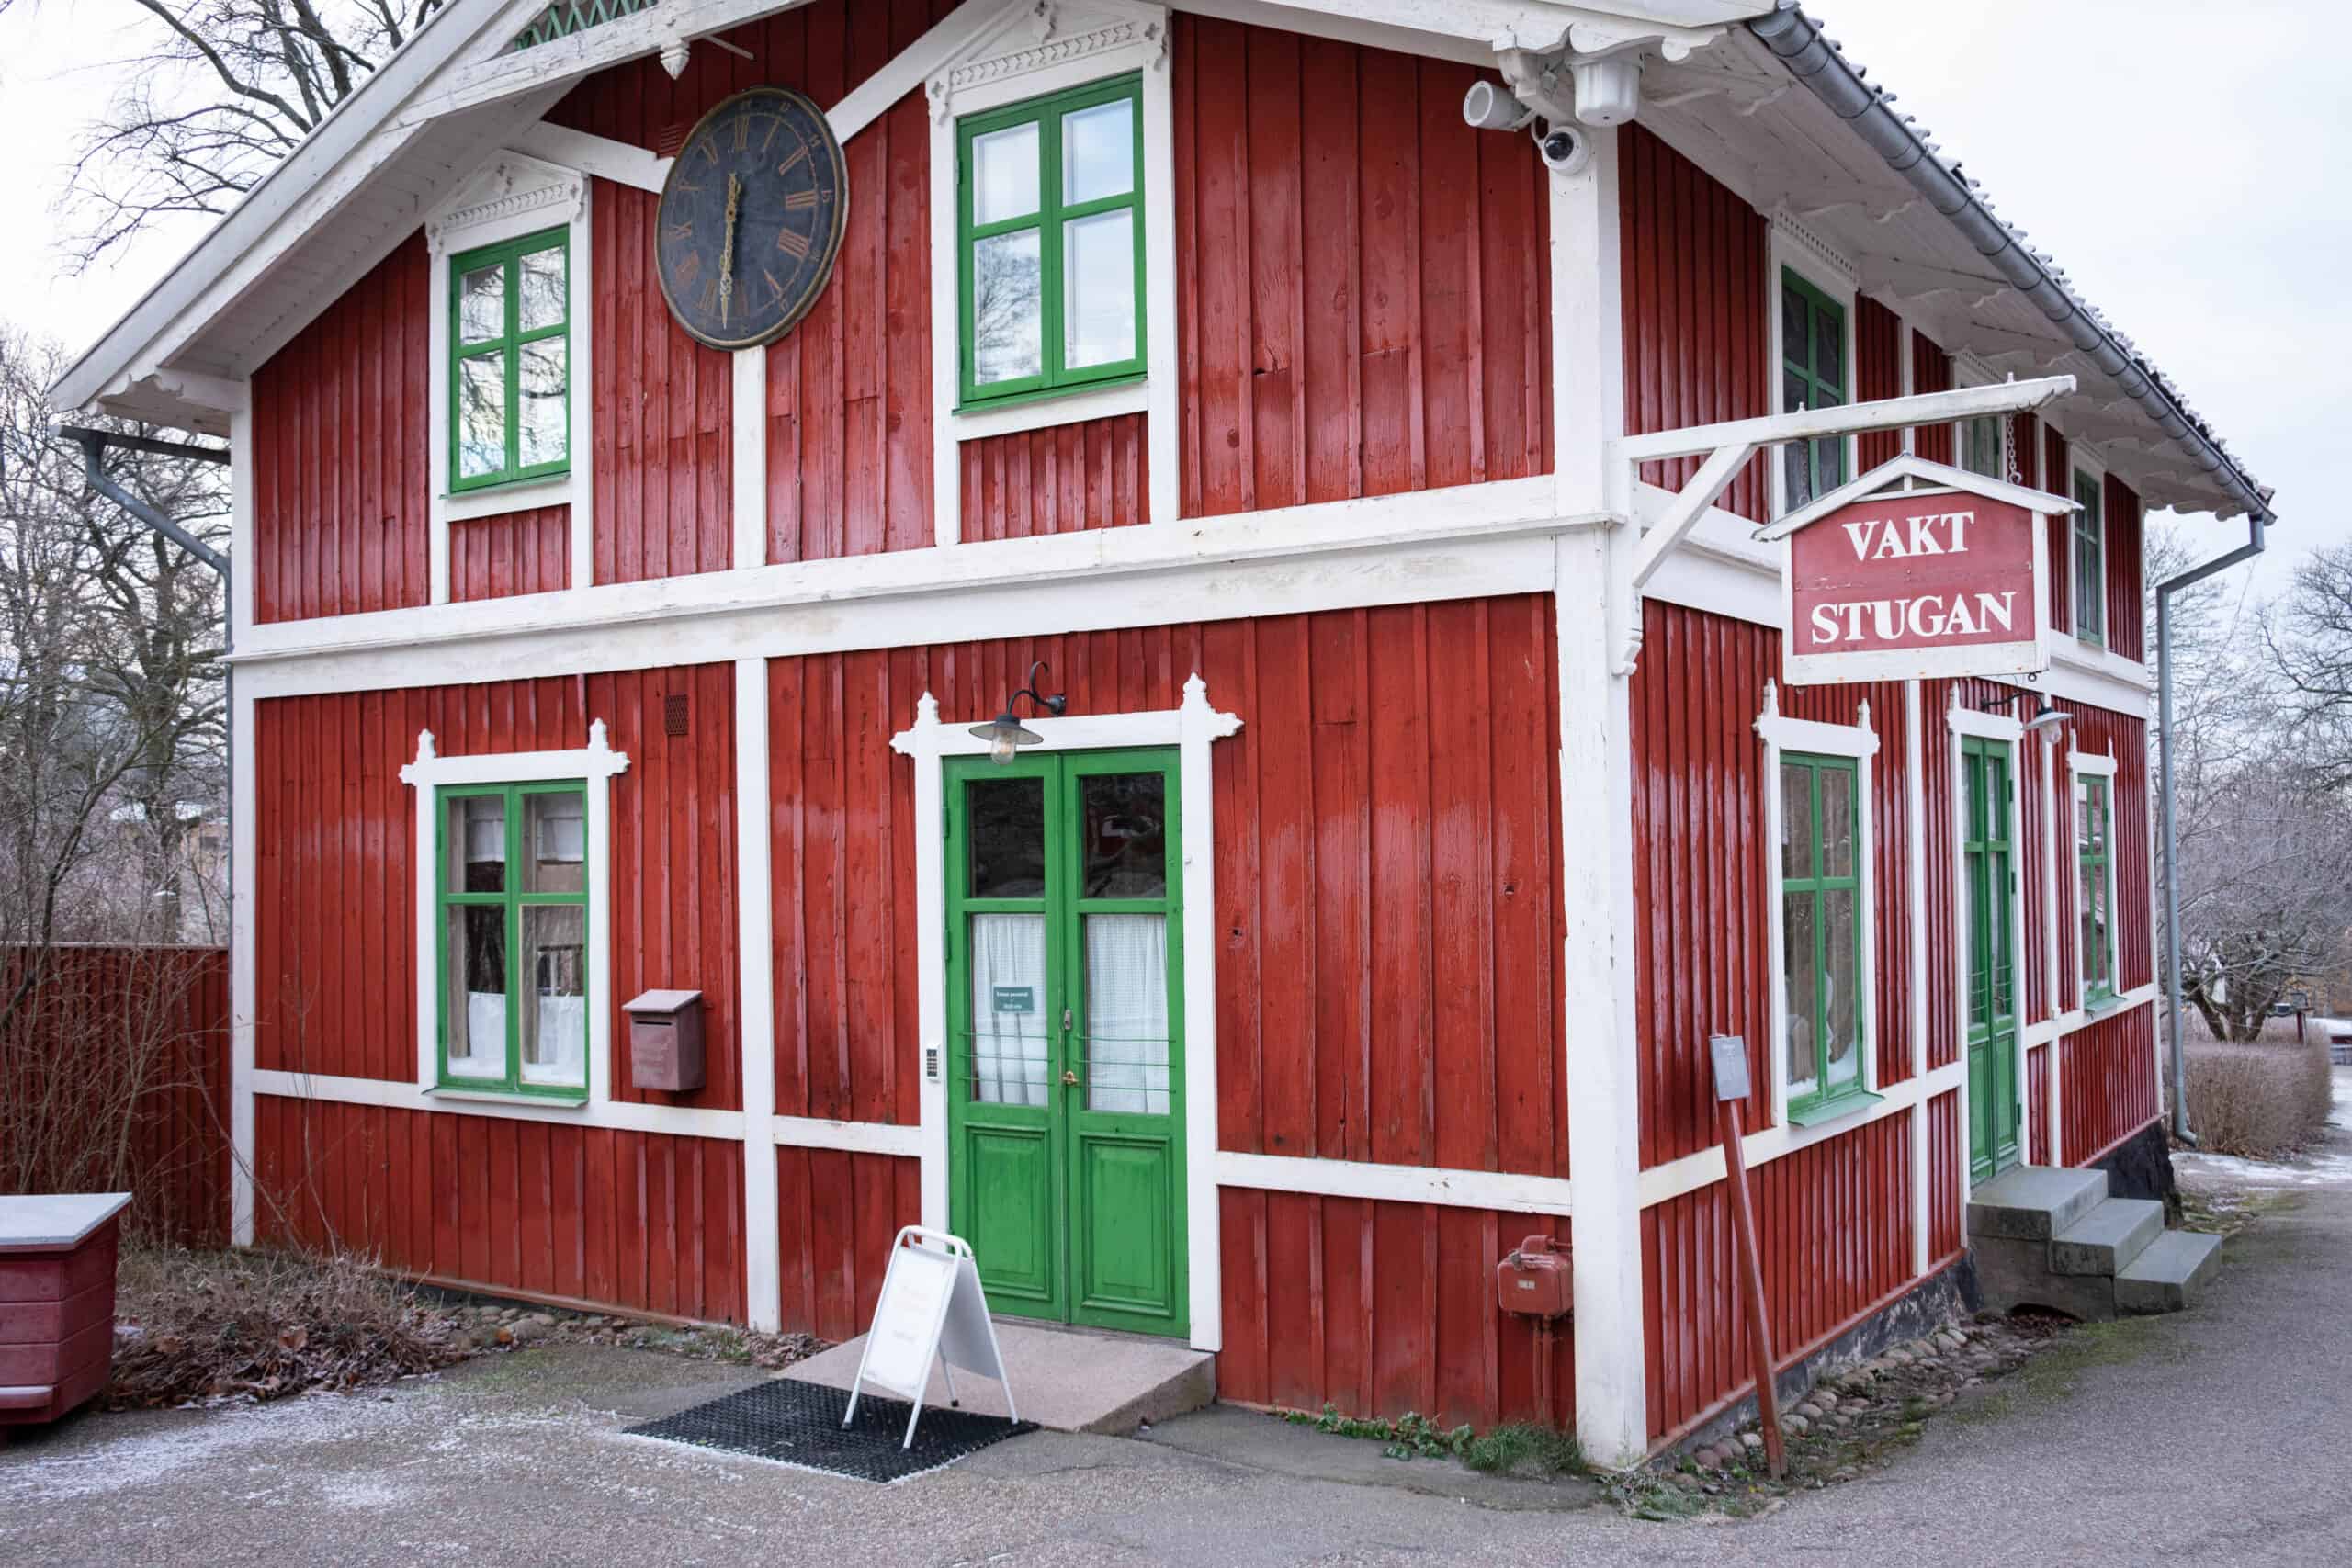 Red Building at Skansen Museum in Stockholm